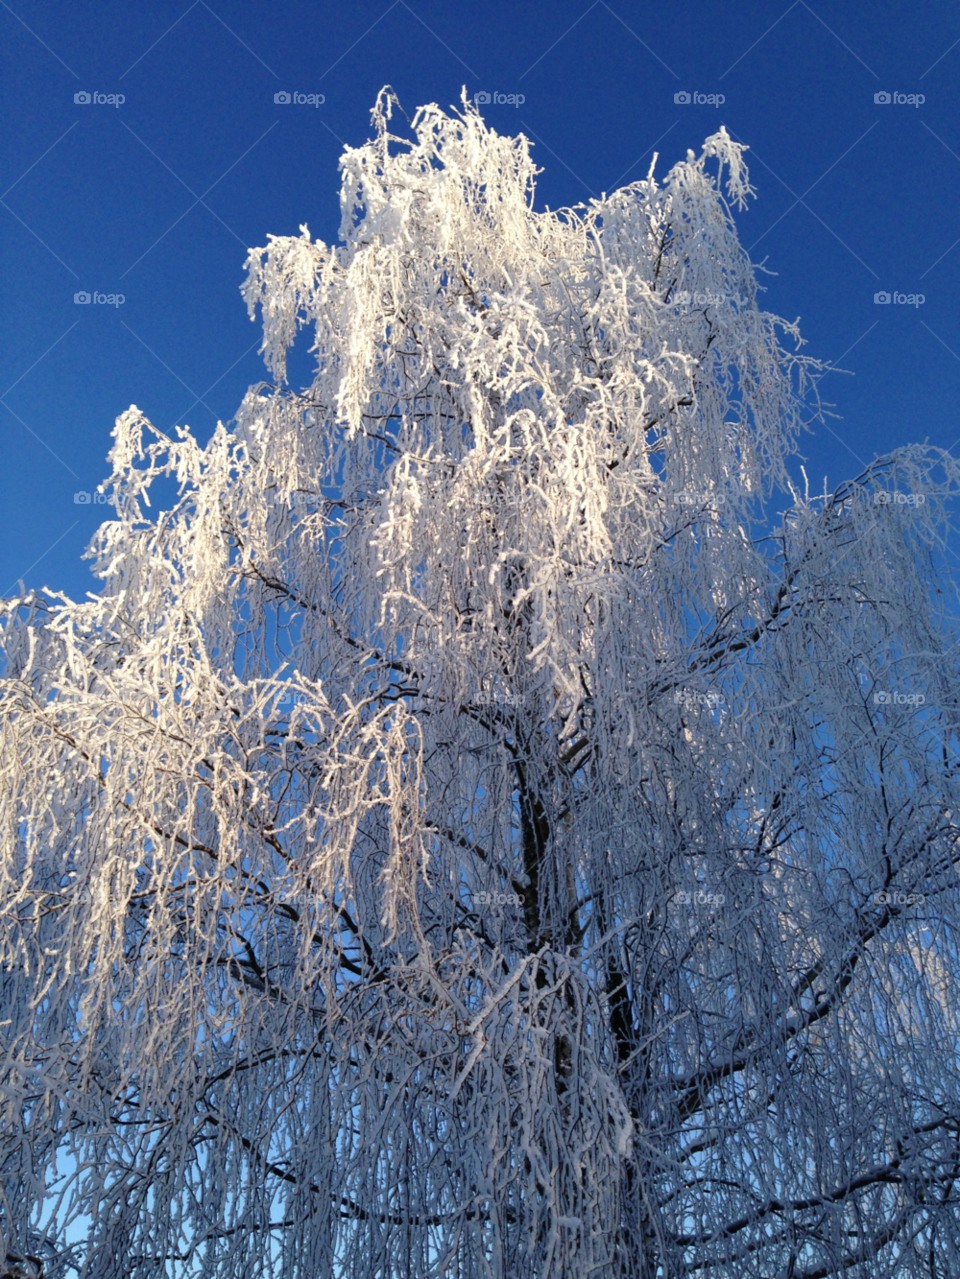 winter trees -20 c stockholm by Drakneid